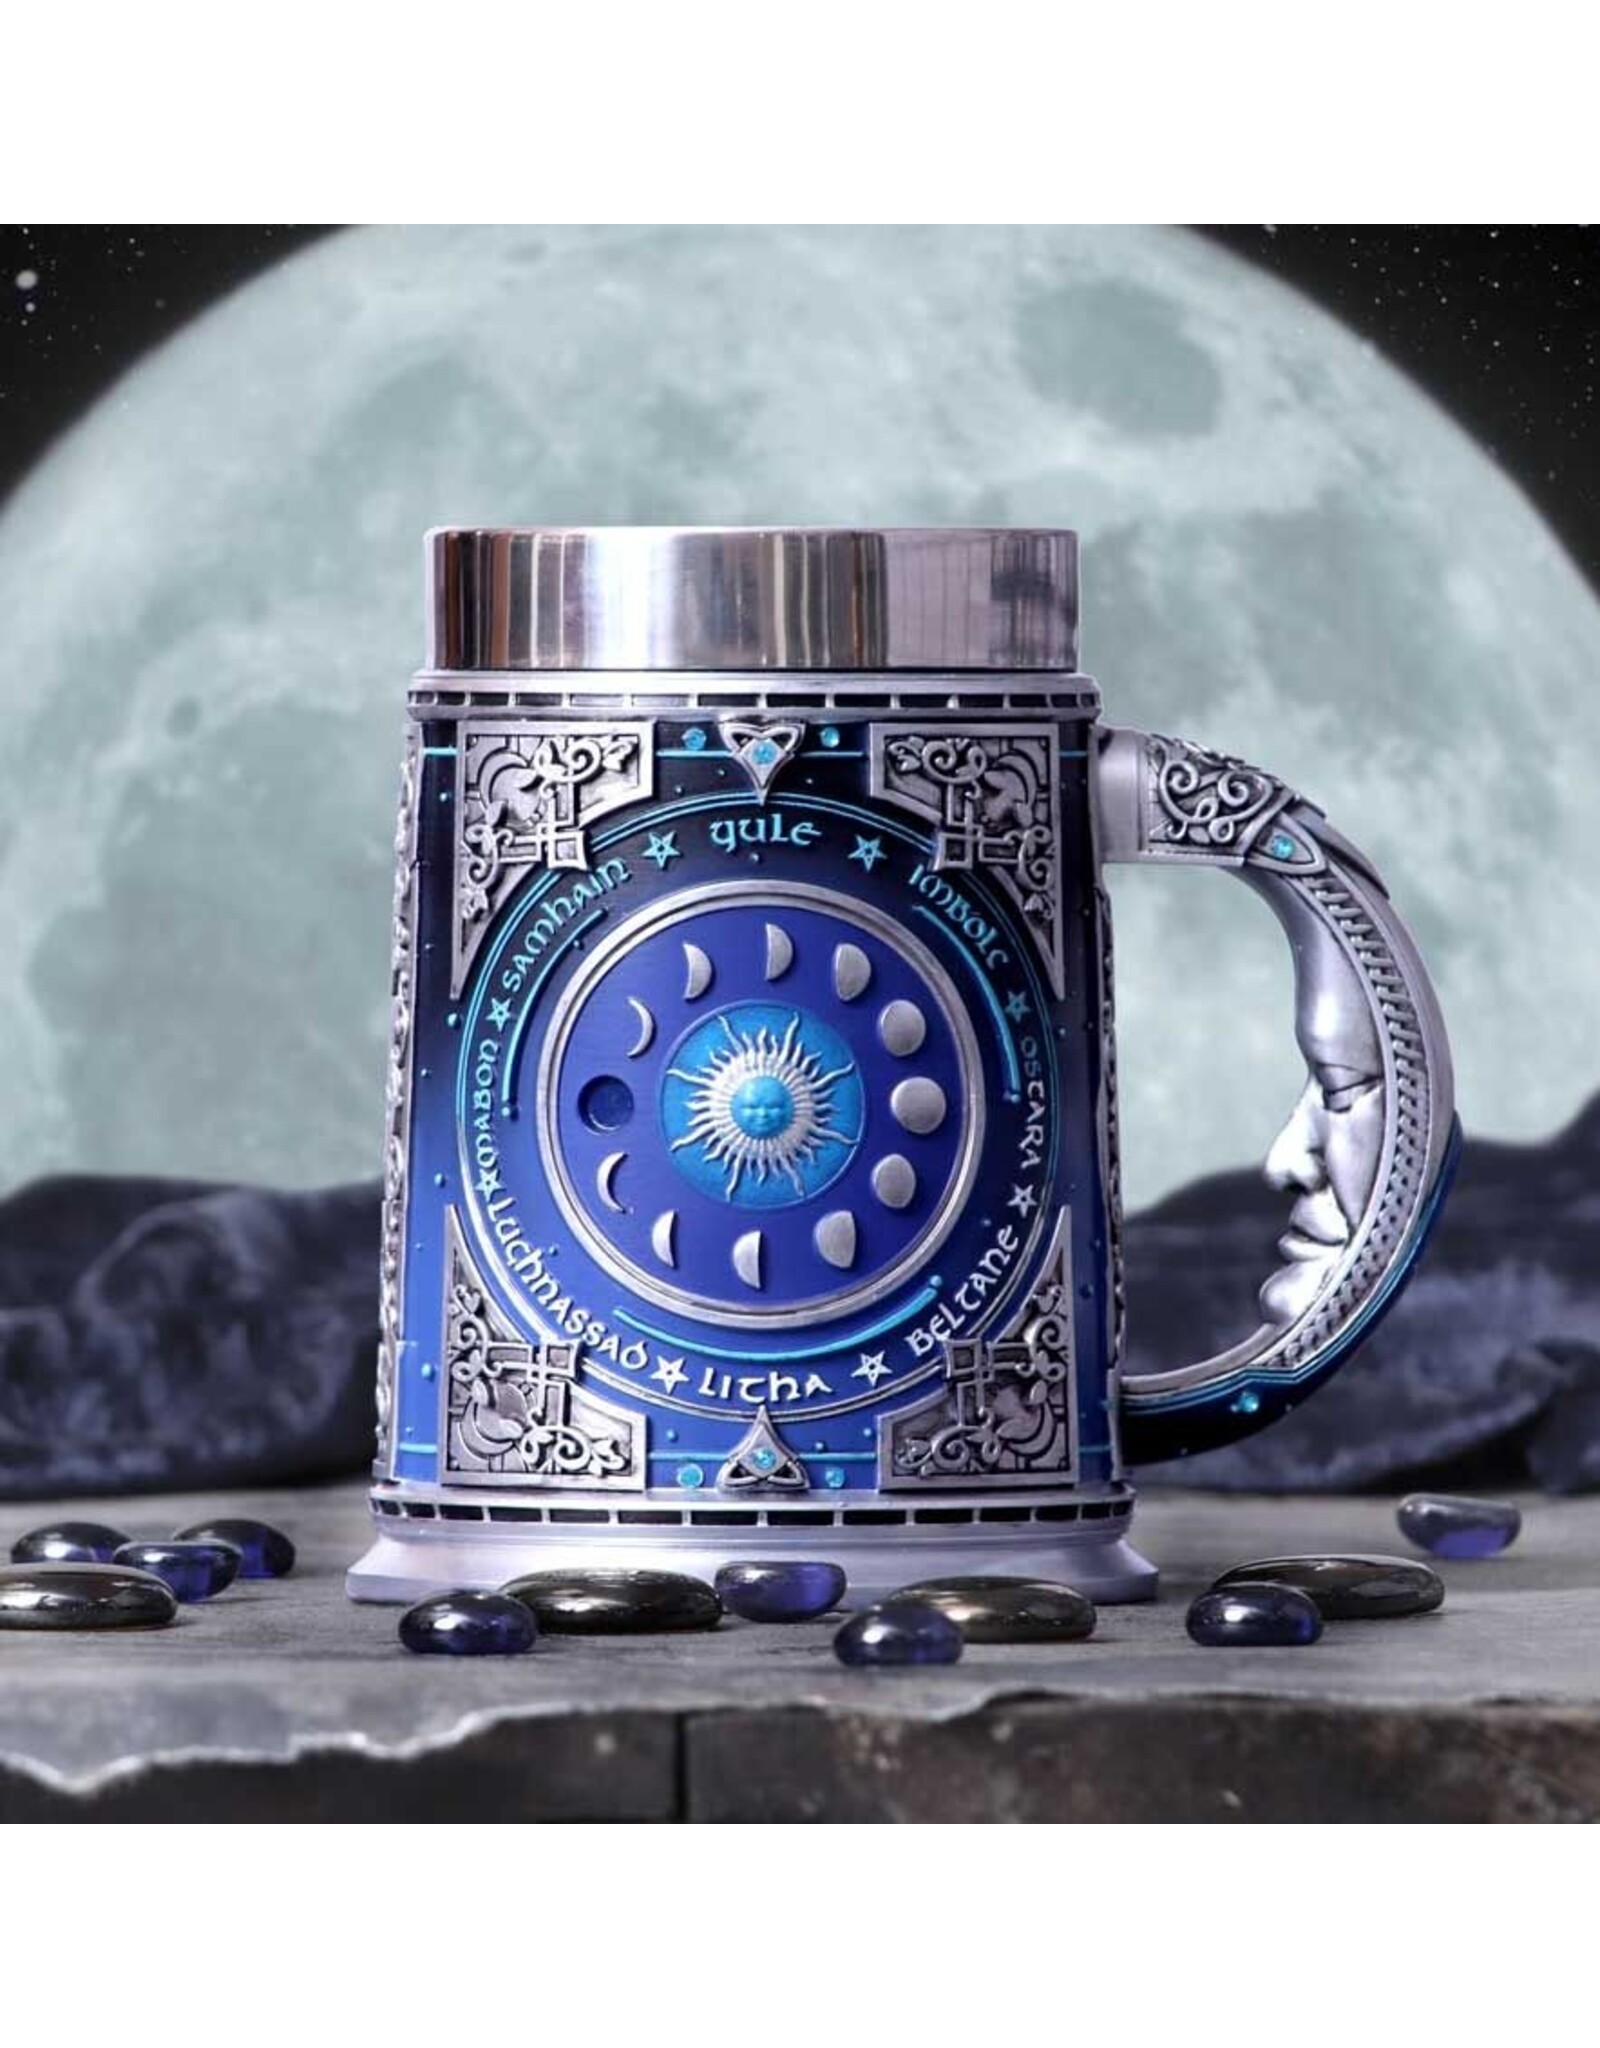 NemesisNow Drinkware - Moon Guide Tankard Moon Phases mug - Nemesis Now